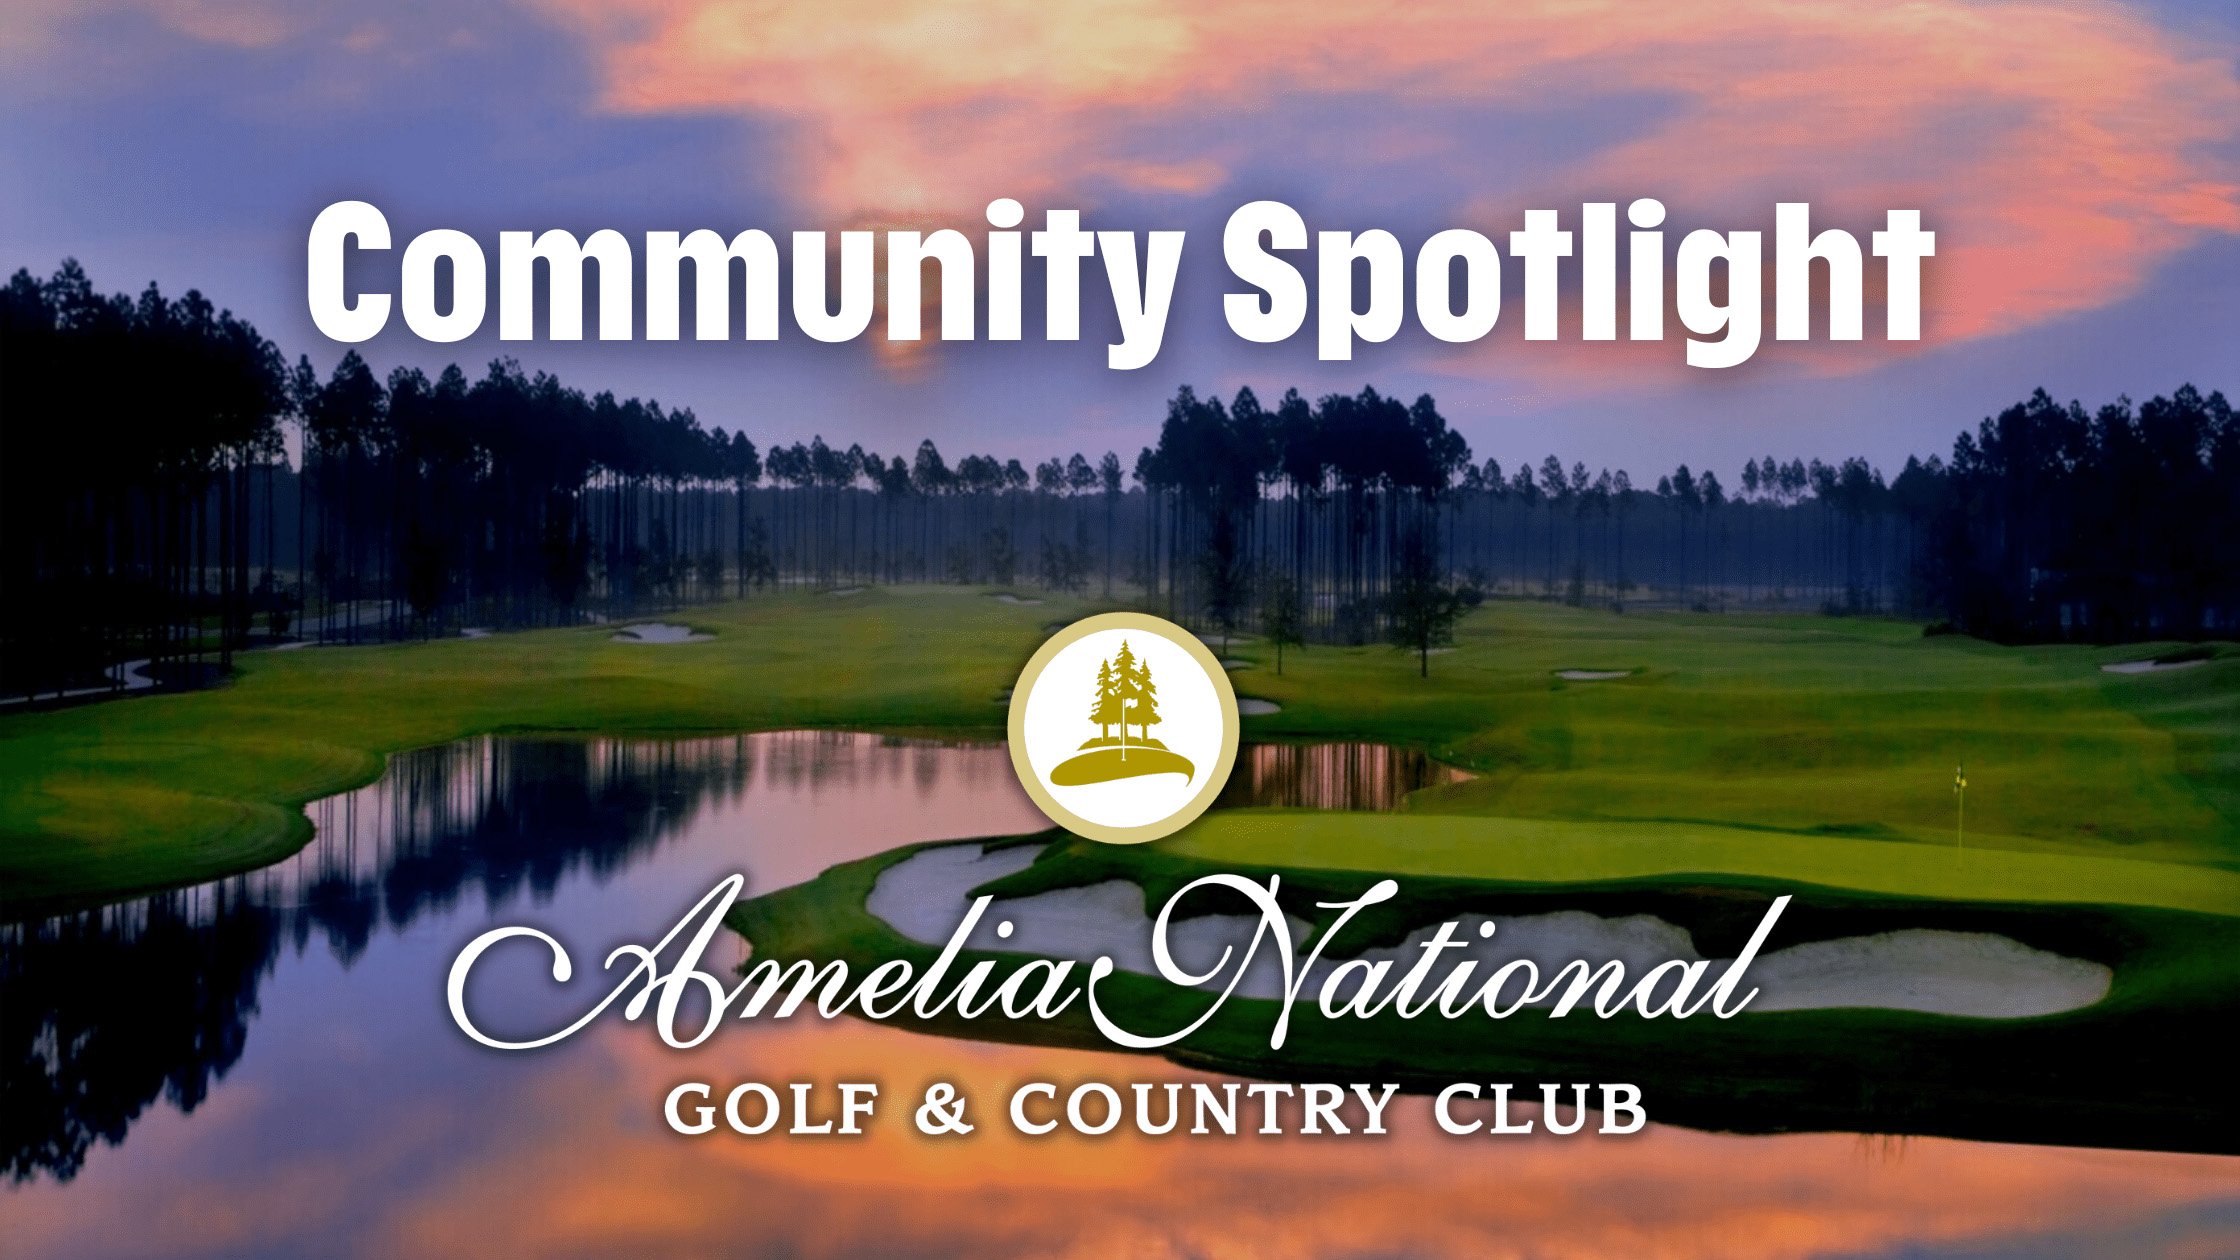 Community Spotlight: Exploring Amelia National - Amelia National Community Spotlight